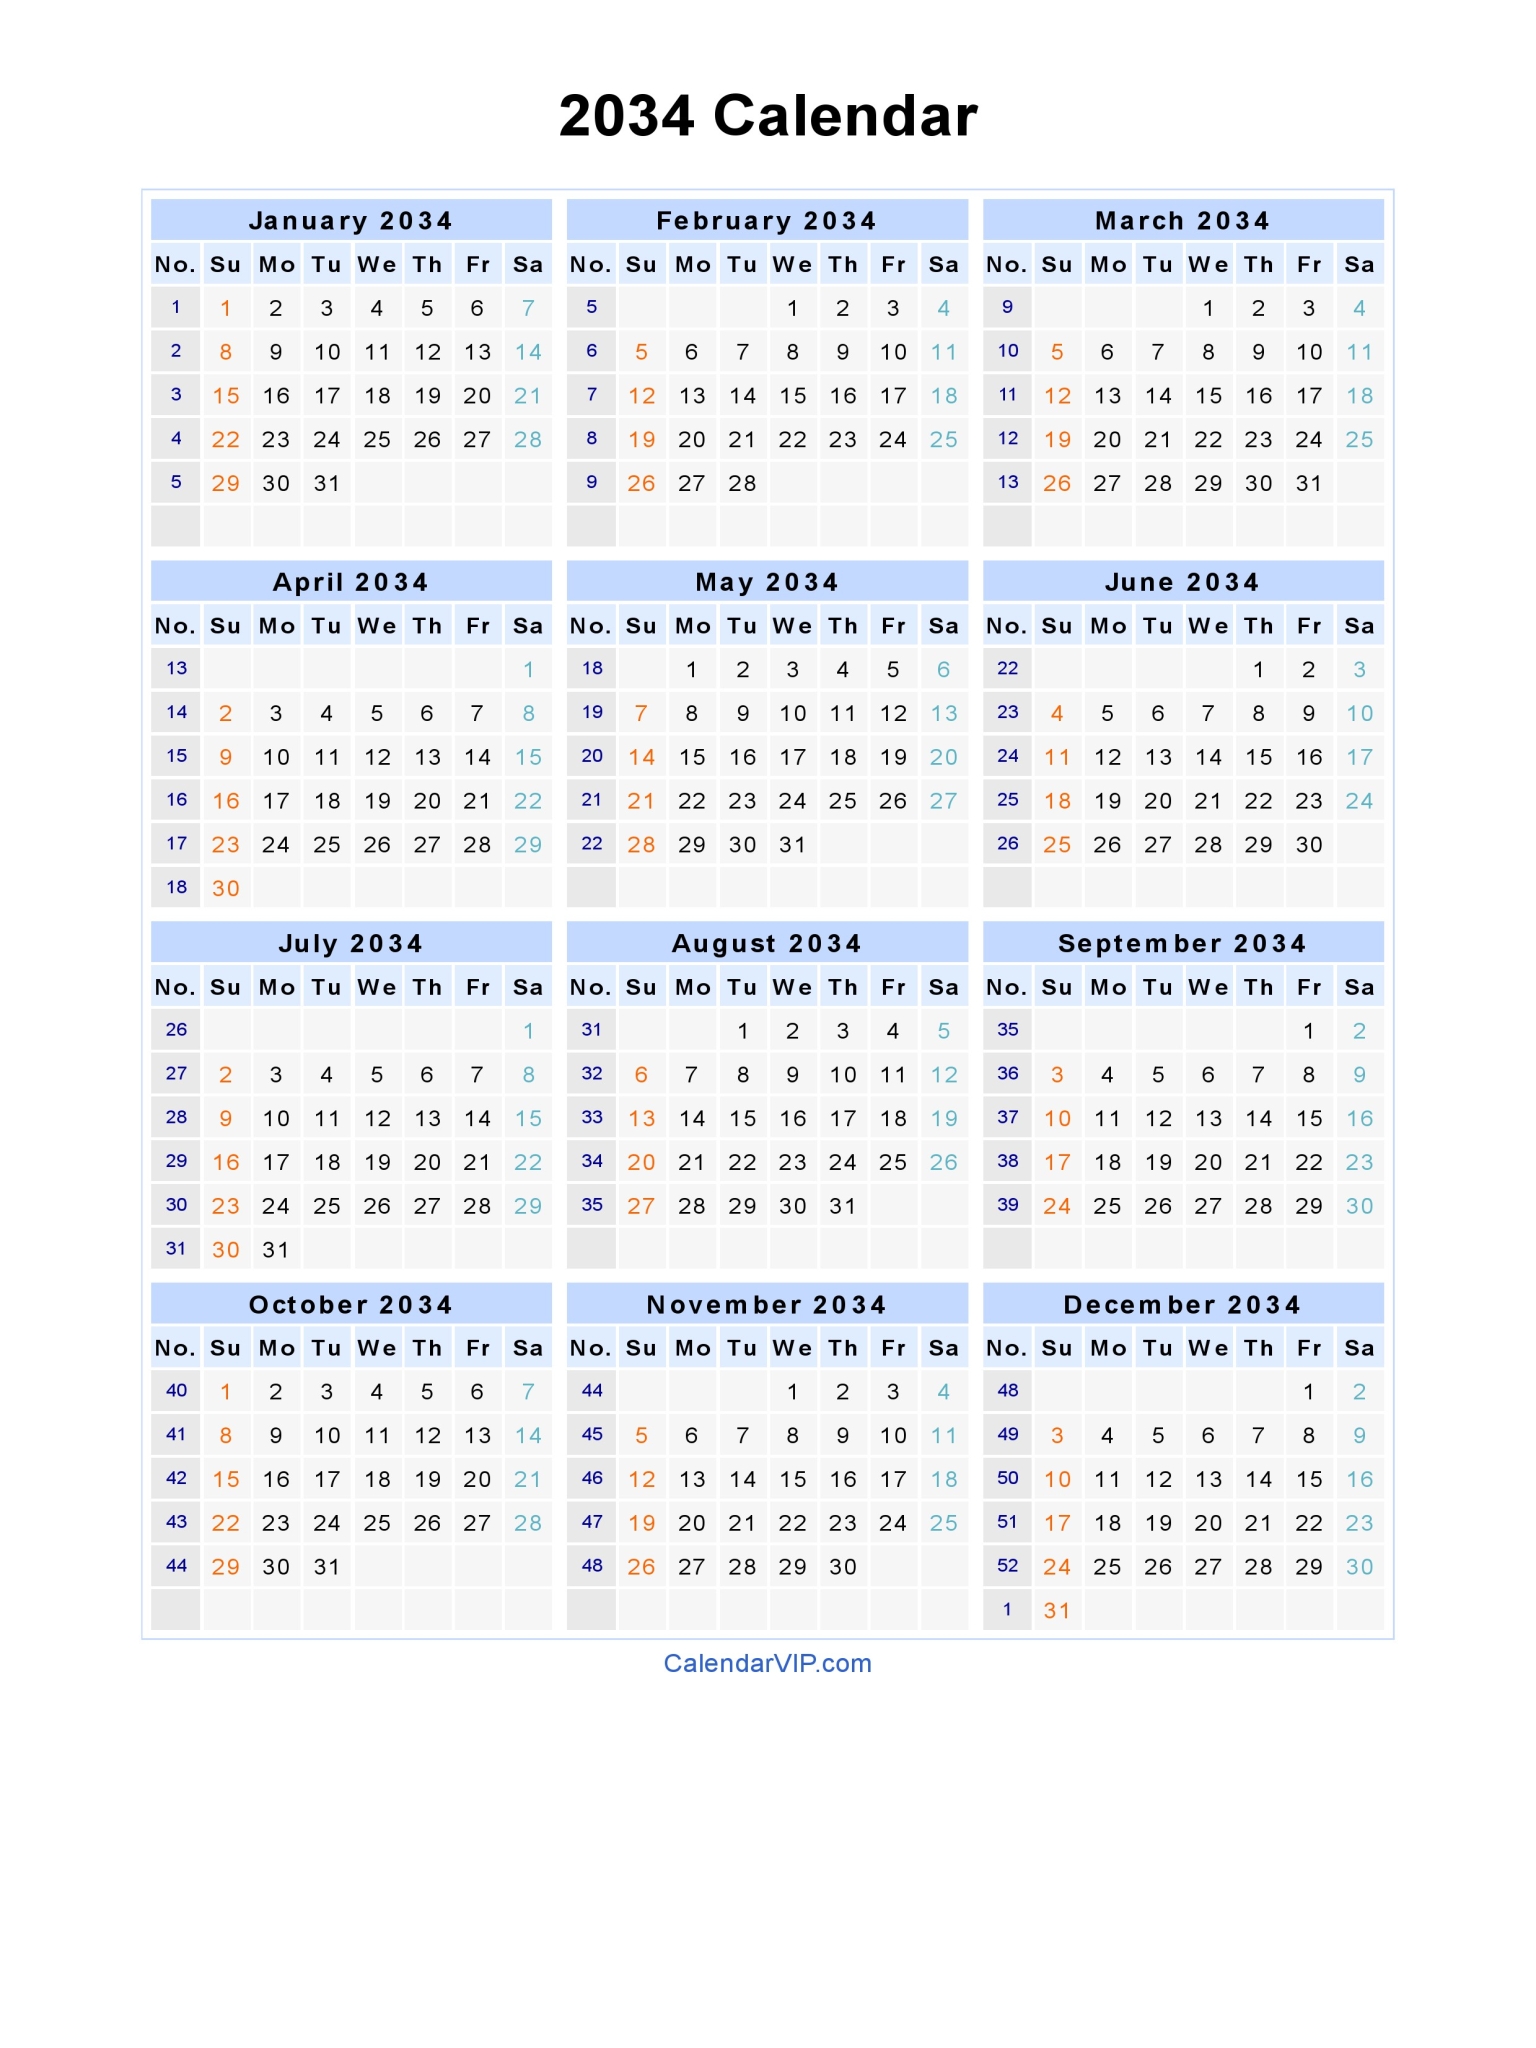 2034 Calendar - Blank Printable Calendar Template in PDF Word Excel1536 x 2048